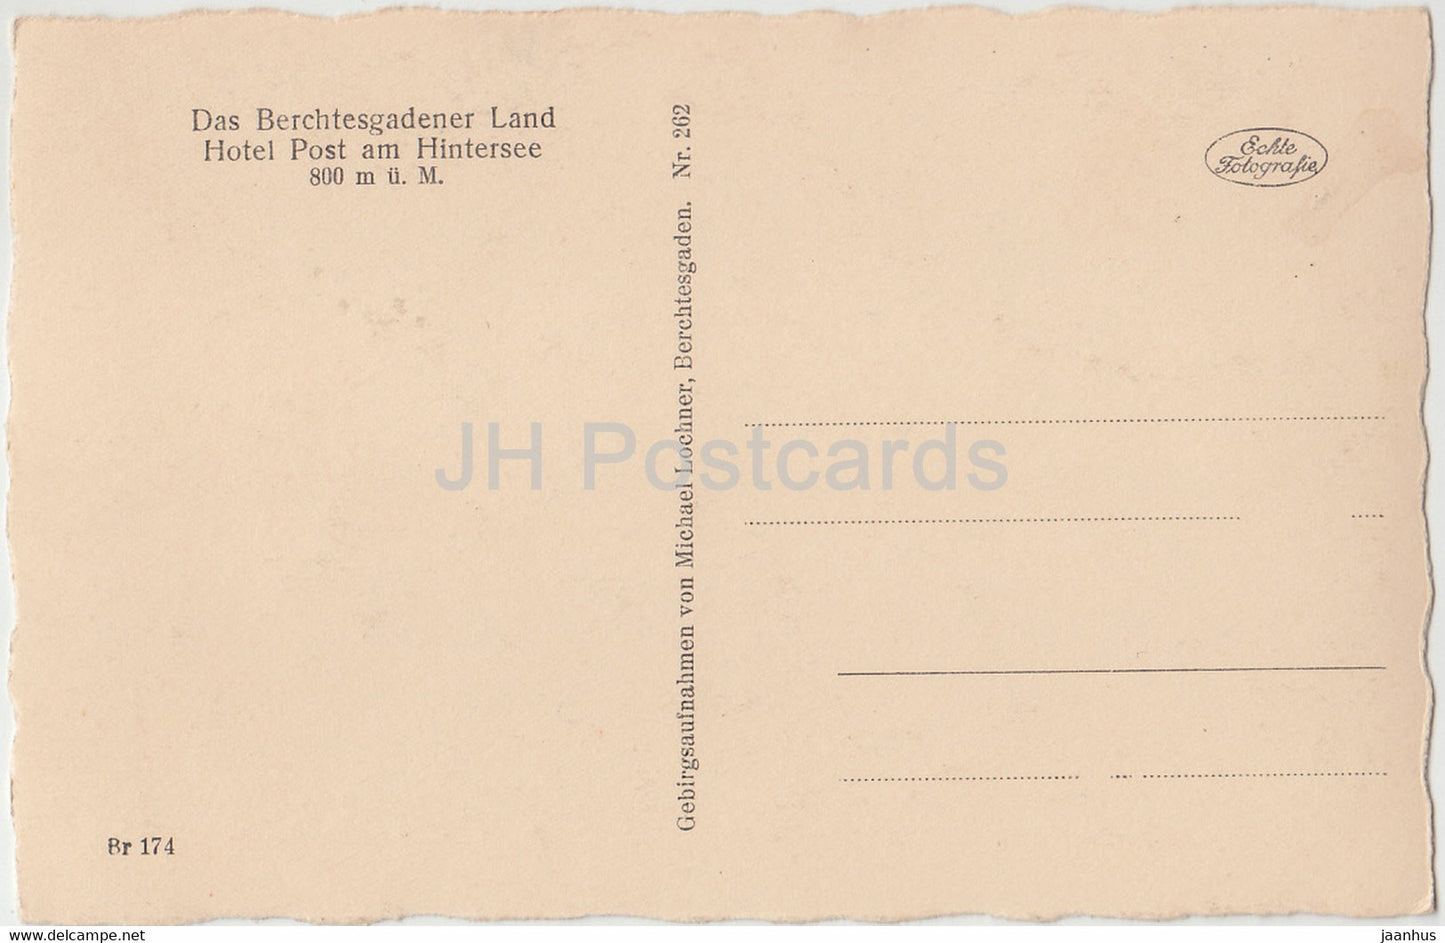 Am Hintersee - Das Berchtesgaden Land - Hôtel Post am Hintersee 800 m - 262 - carte postale ancienne - Allemagne - inutilisée